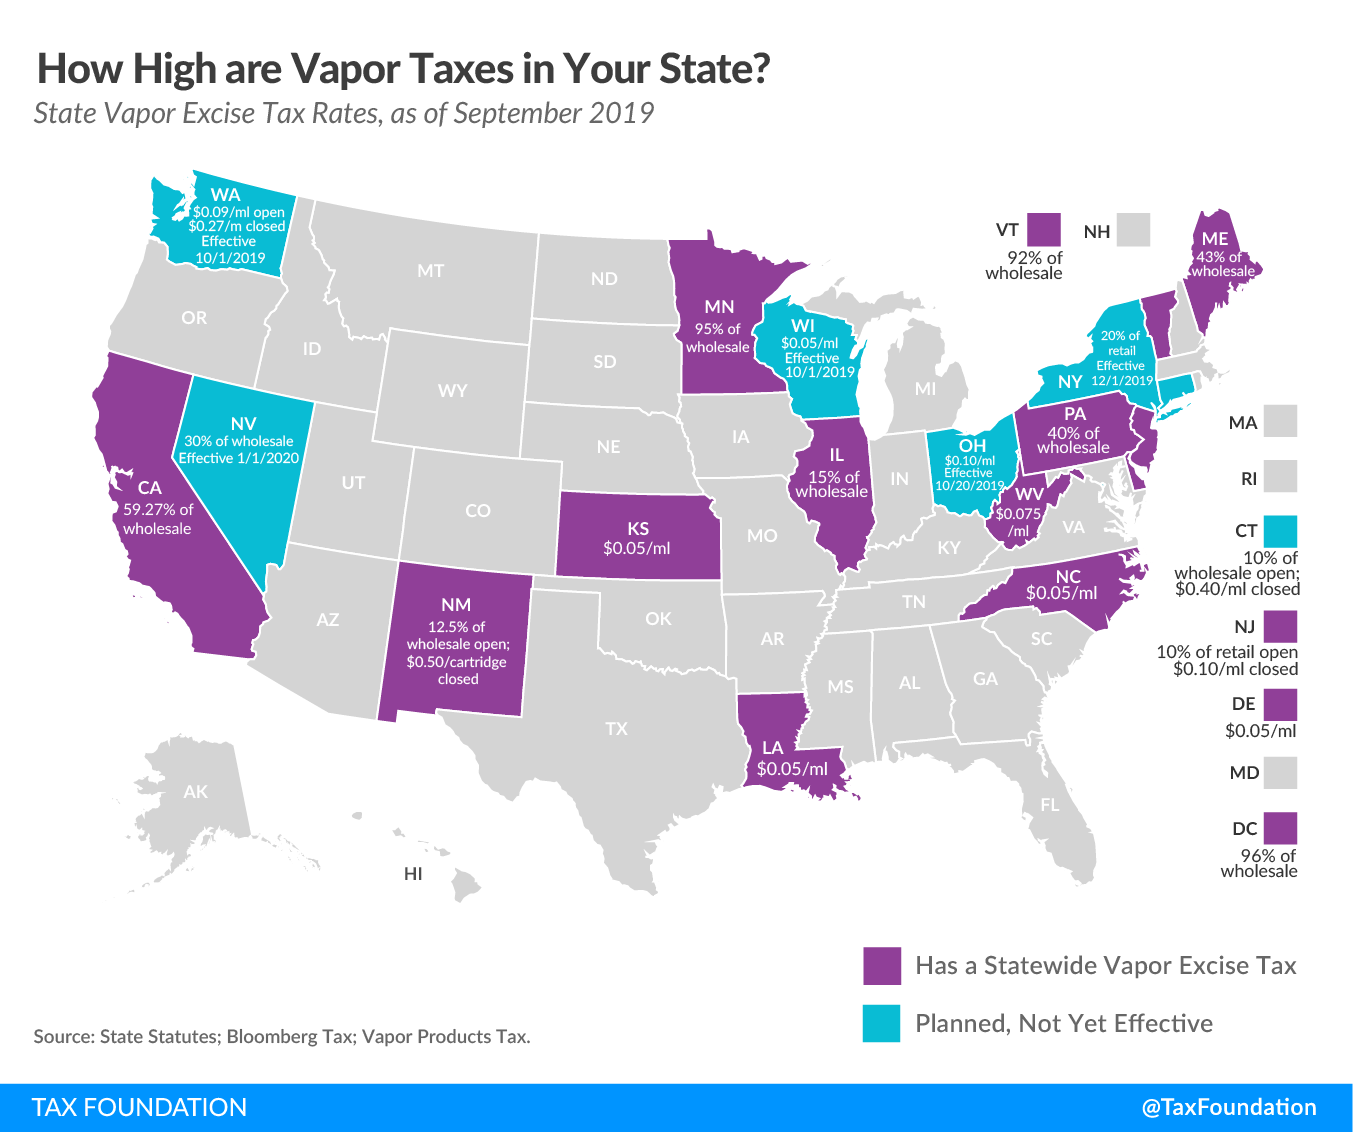 Vaporizer E-cigarette, vape tax, vaping tax, vapor tax, e-cigarette tax, e-cigarette ban, ban on flavored nicotine, smoking rates have declined, Trump ban e-cigarettes